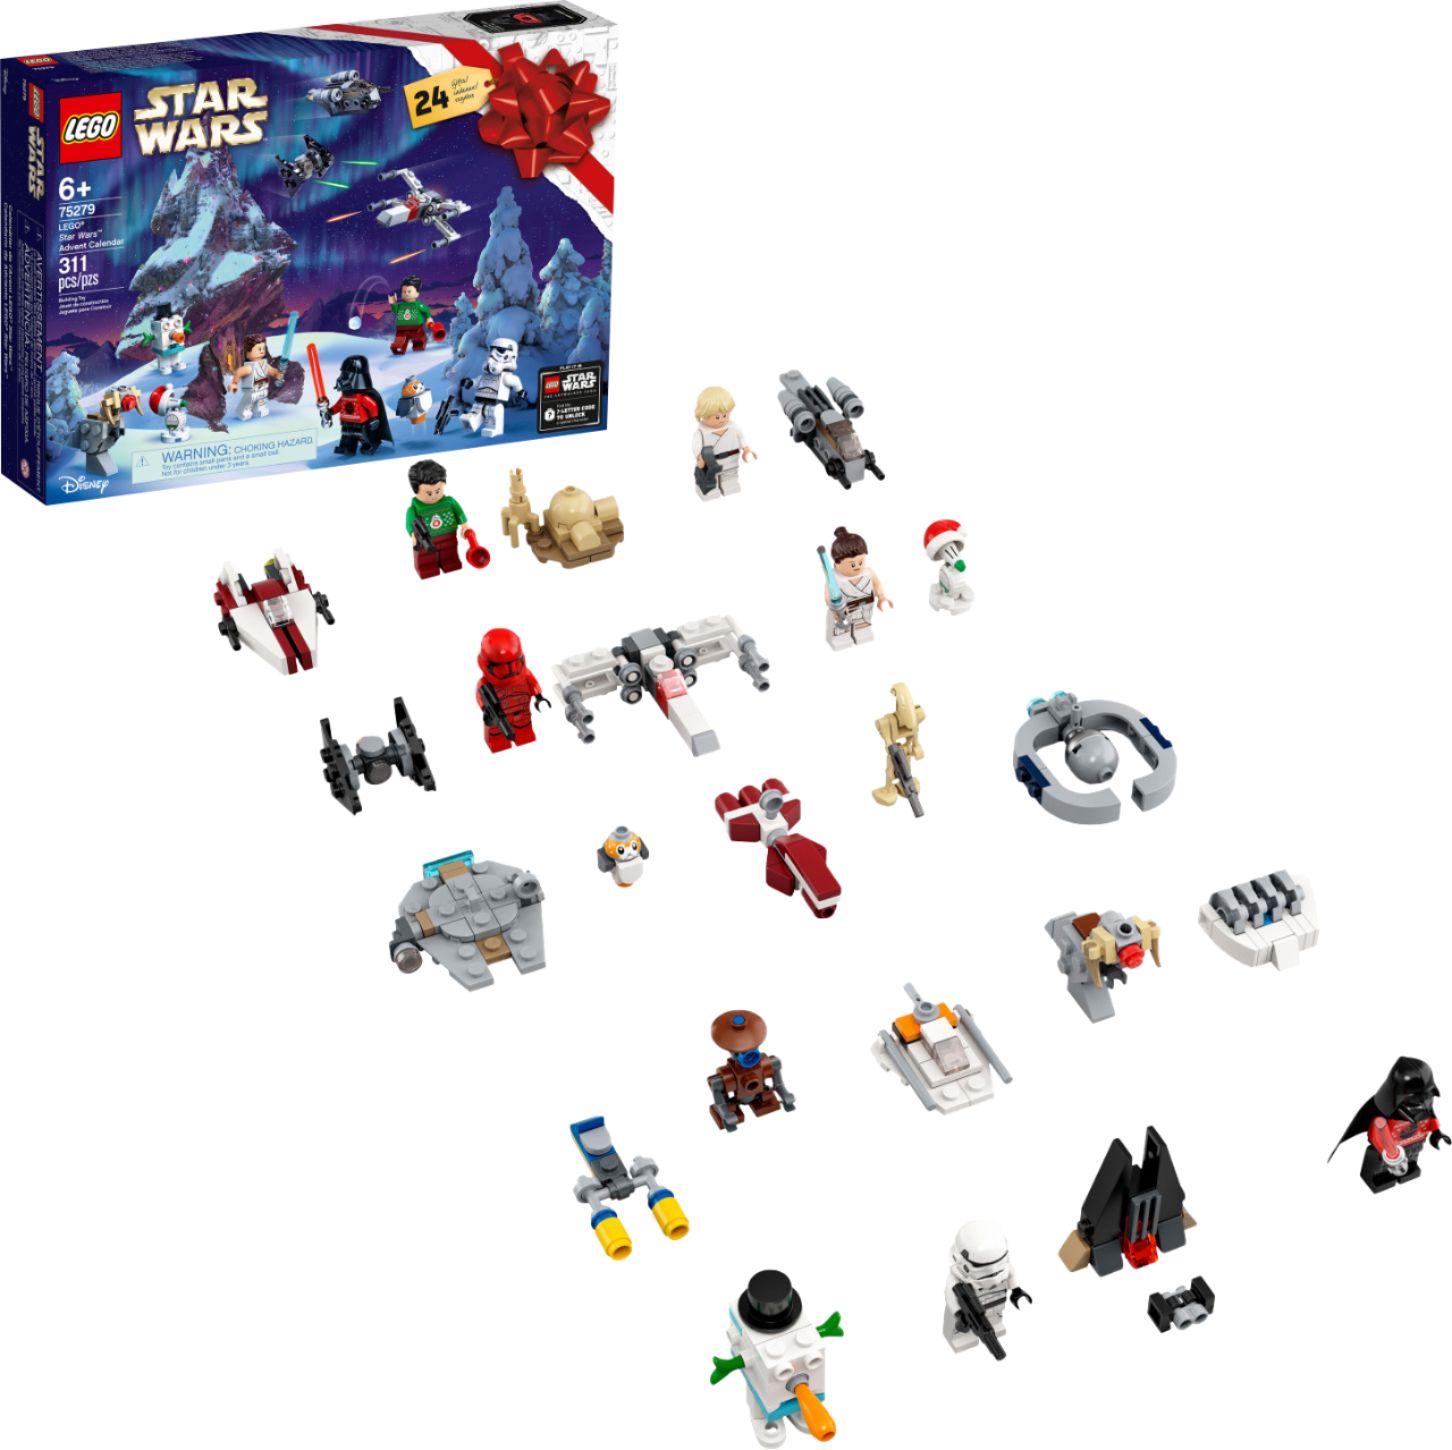 75279 LEGO LEGO Star Wars Advent Calendar Star Wars TM for sale online